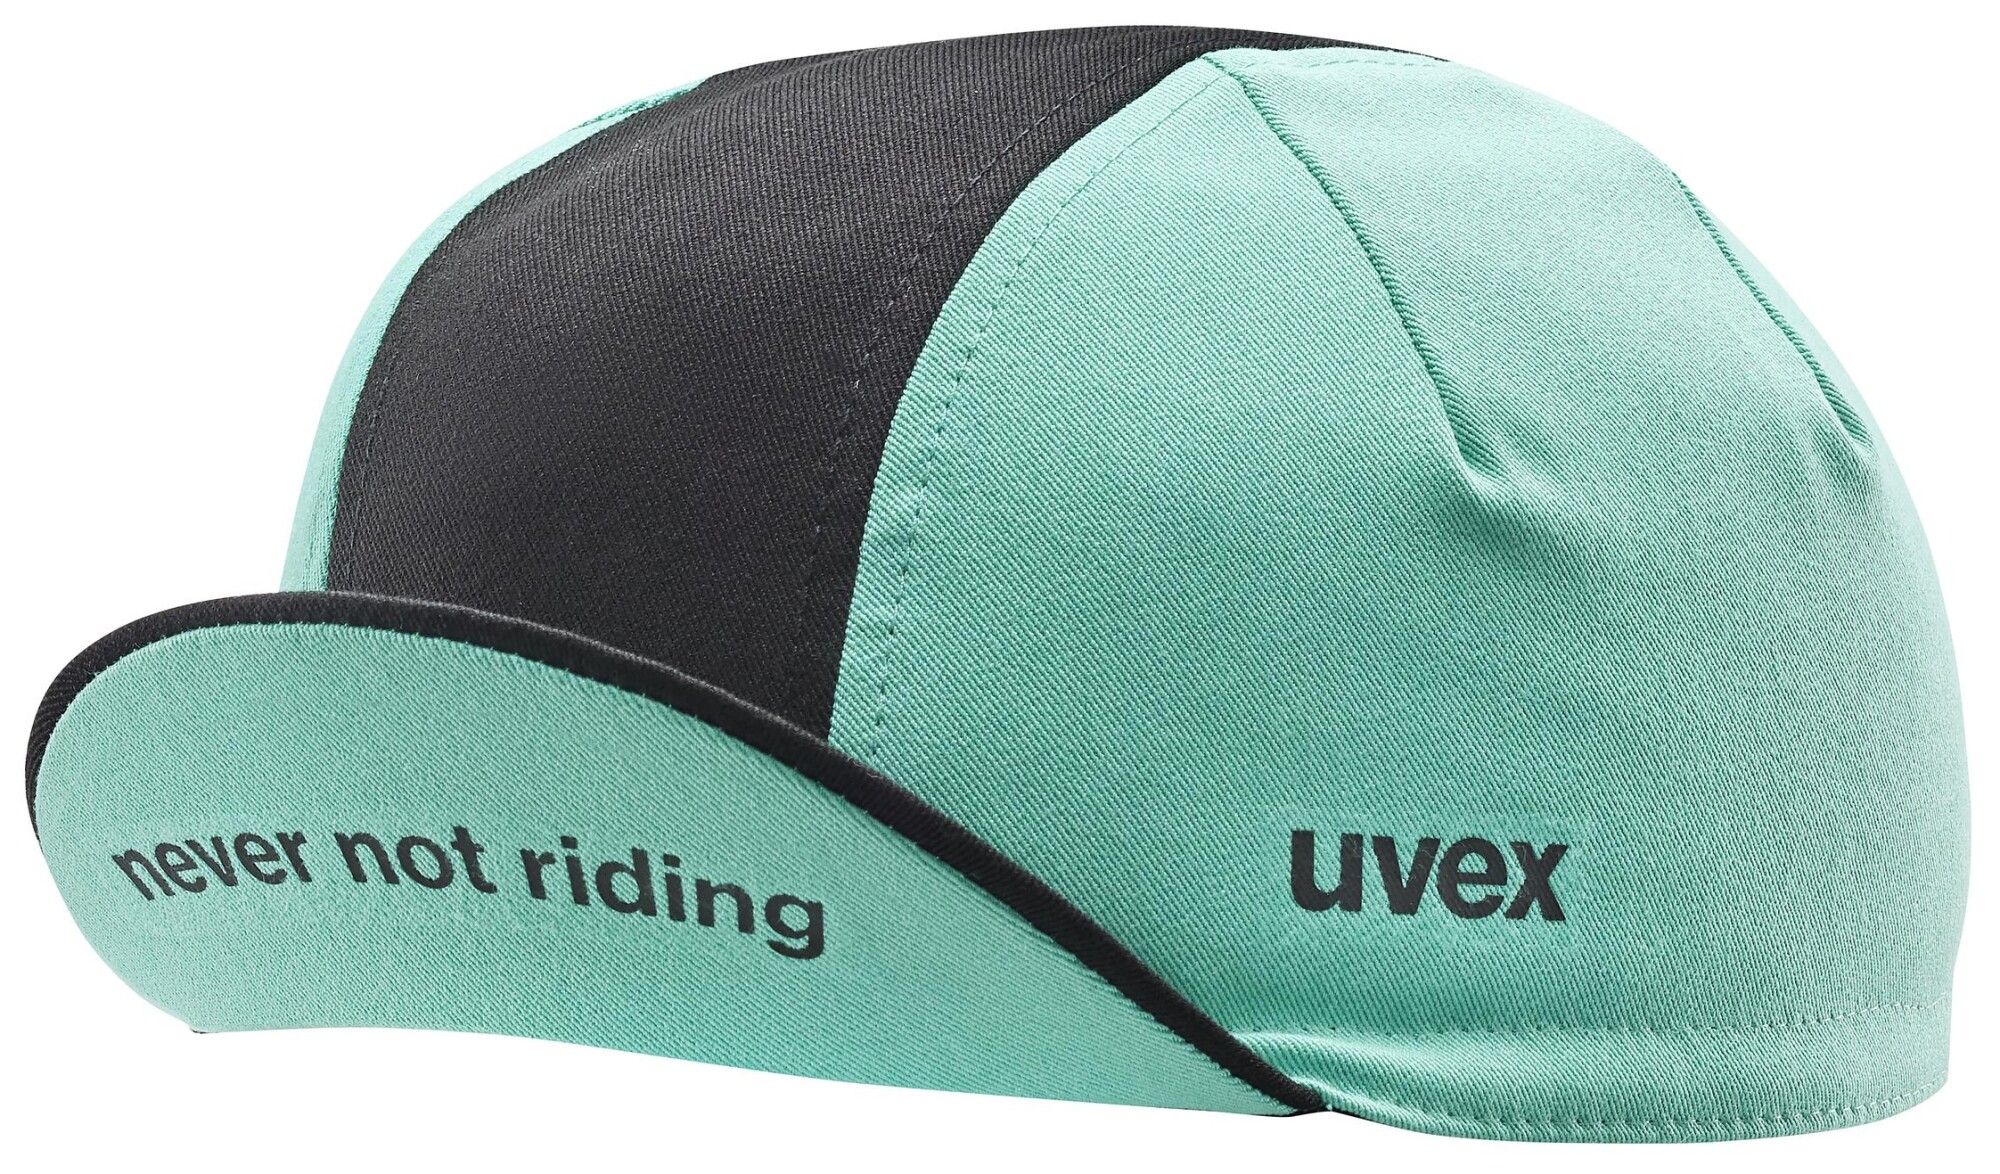 Bild von we cycle uvex cycling cap